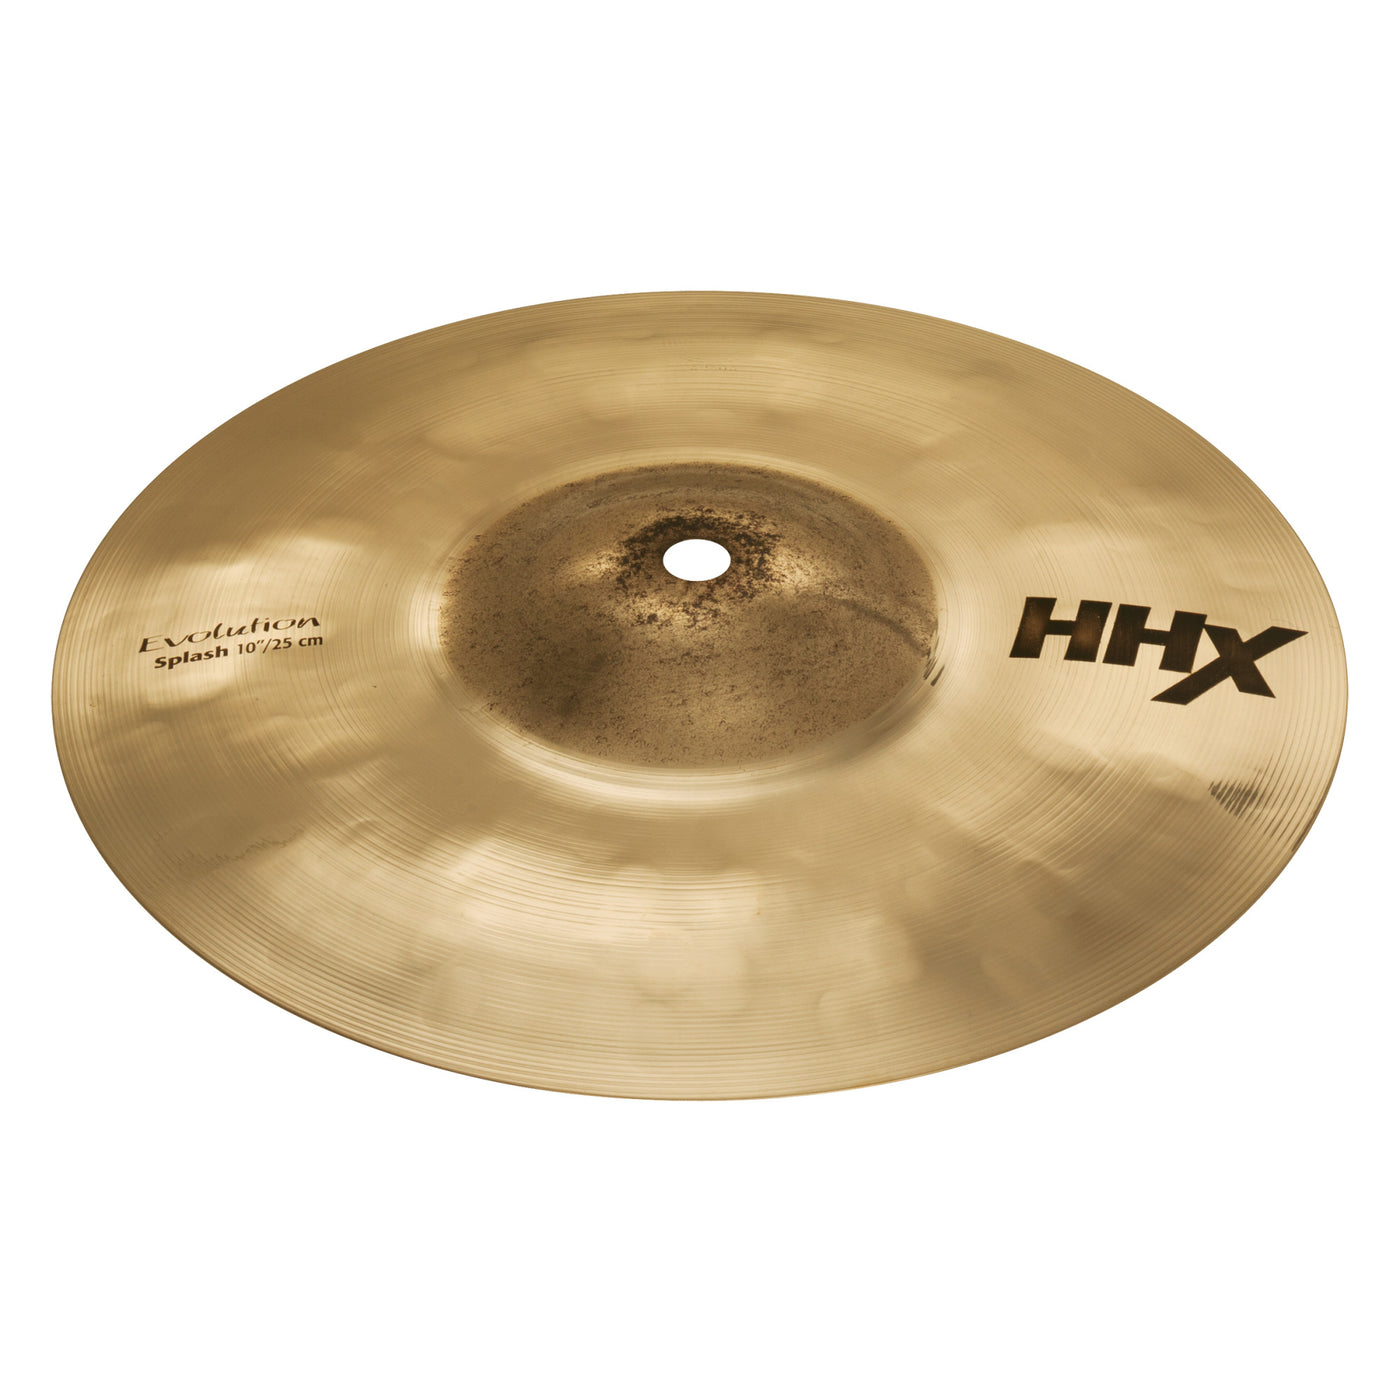 Sabian 10" HHX Evolution Splash Cymbal - Brilliant Finish